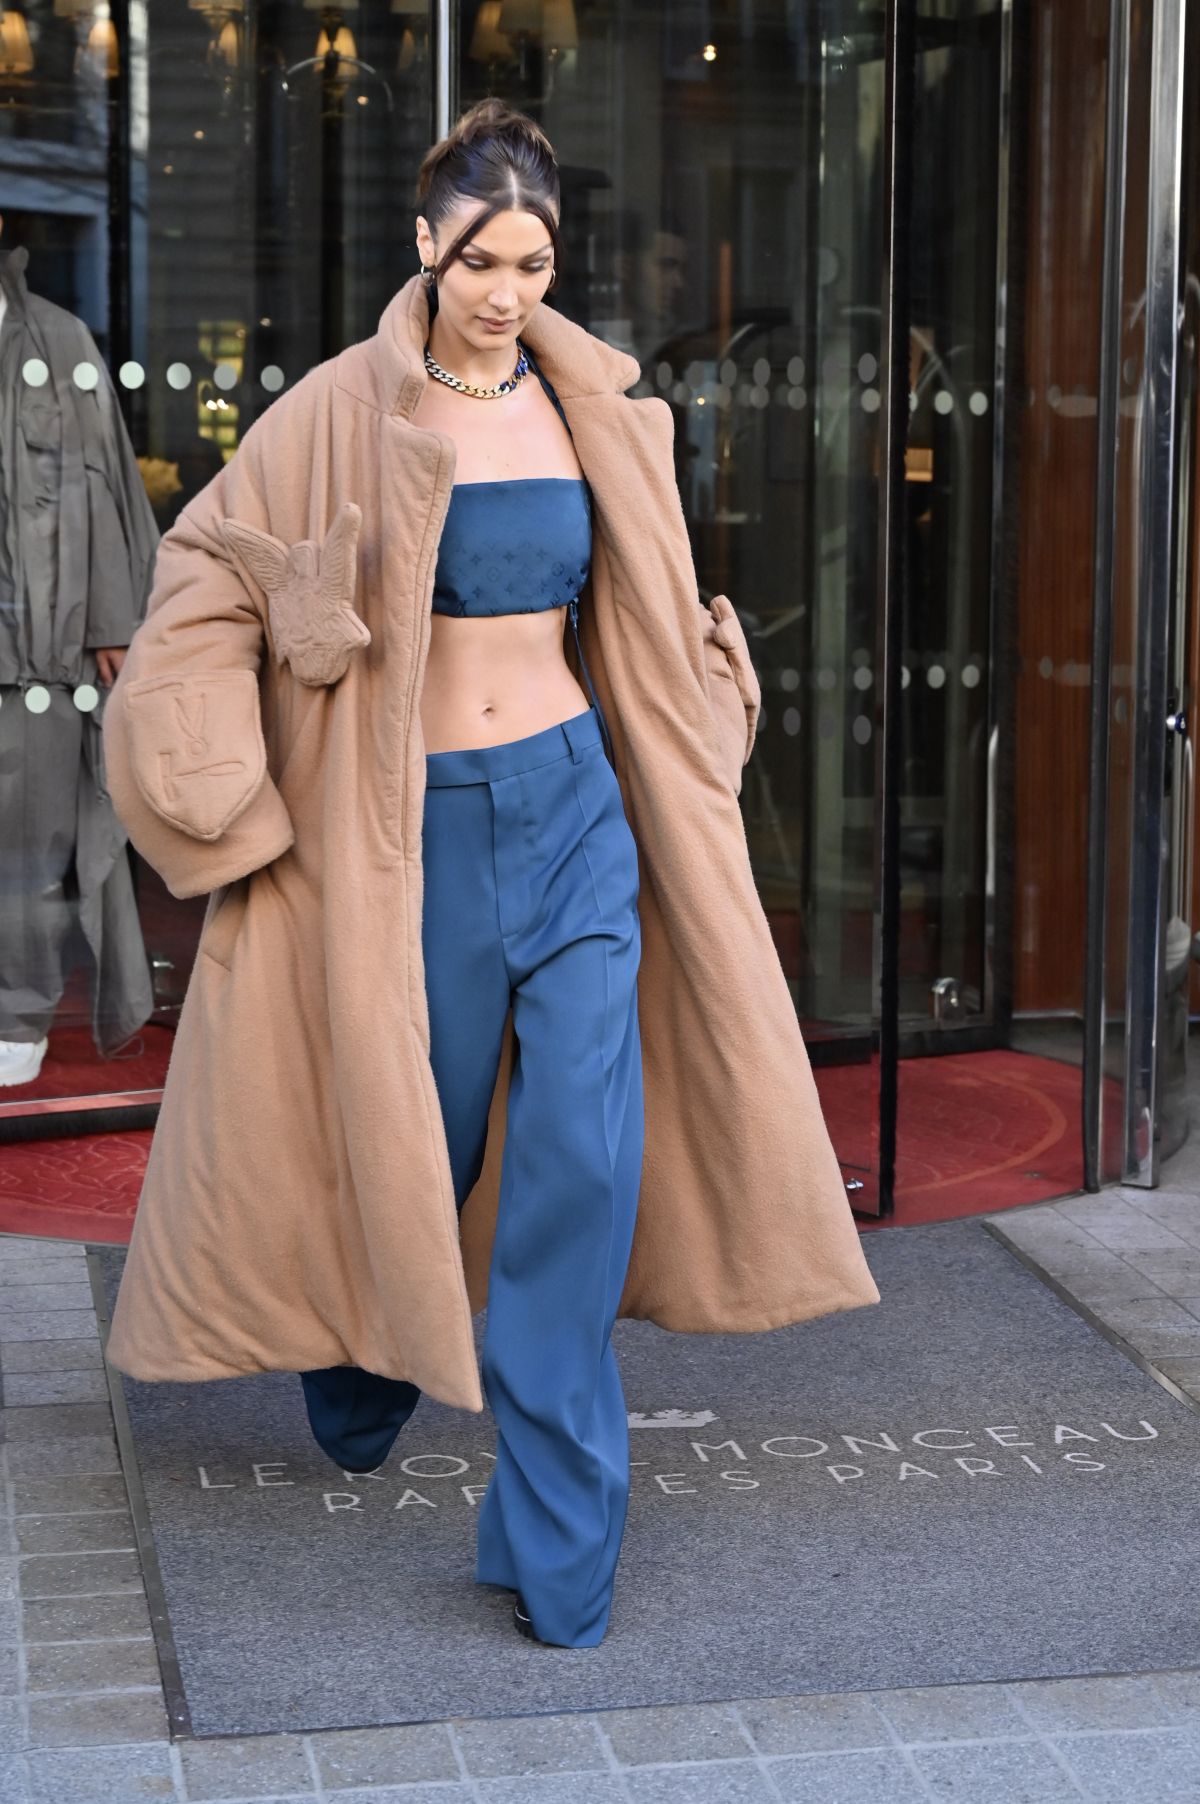 BELLA HADID Heading to Louis Vuitton Fashion Show in Paris 01/16/2020 – HawtCelebs